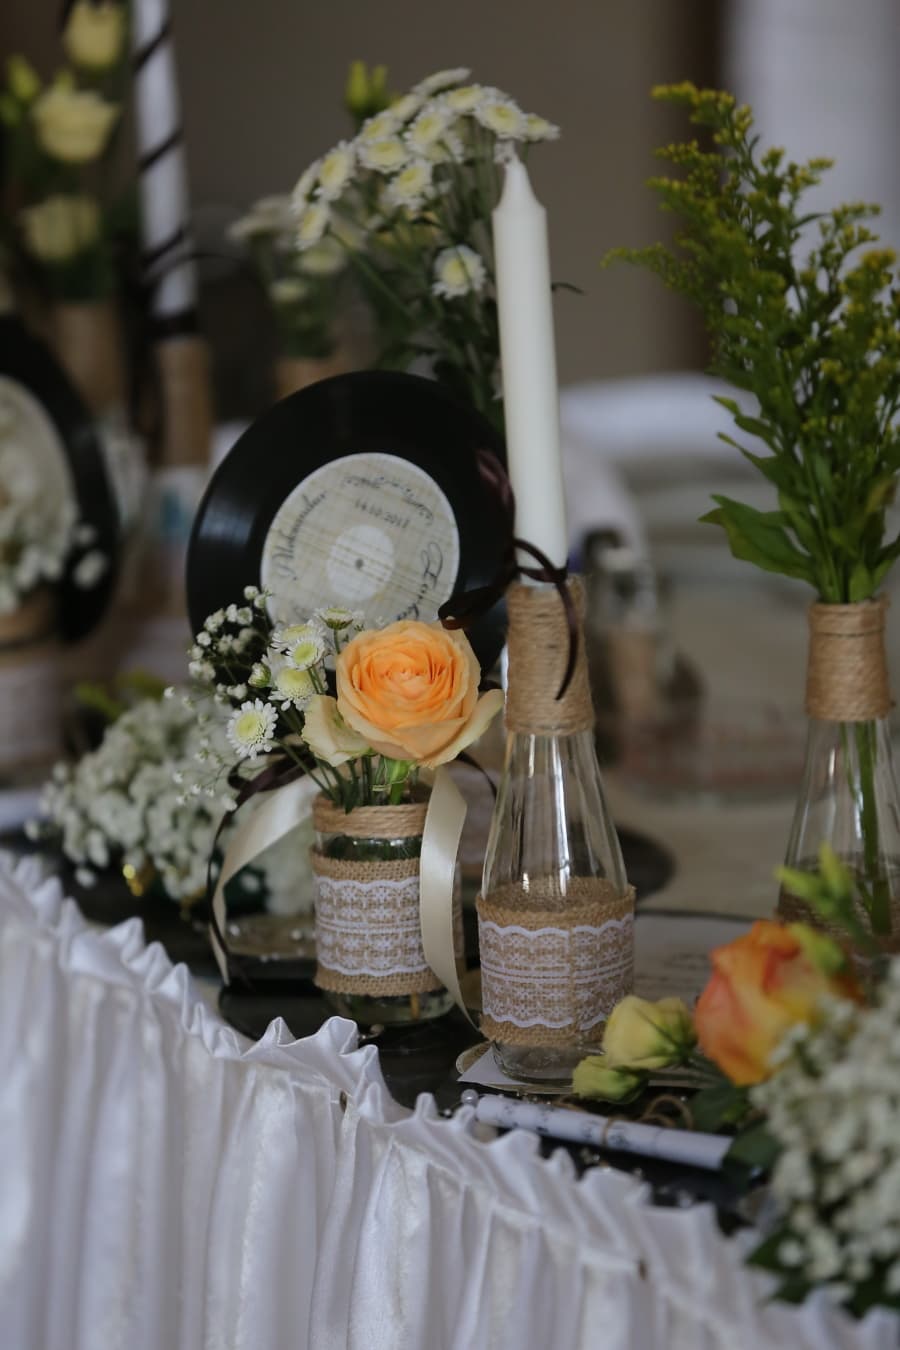 decorative, arrangement, vinyl plate, nostalgia, candle, bottles, candlestick, wedding, bouquet, flower